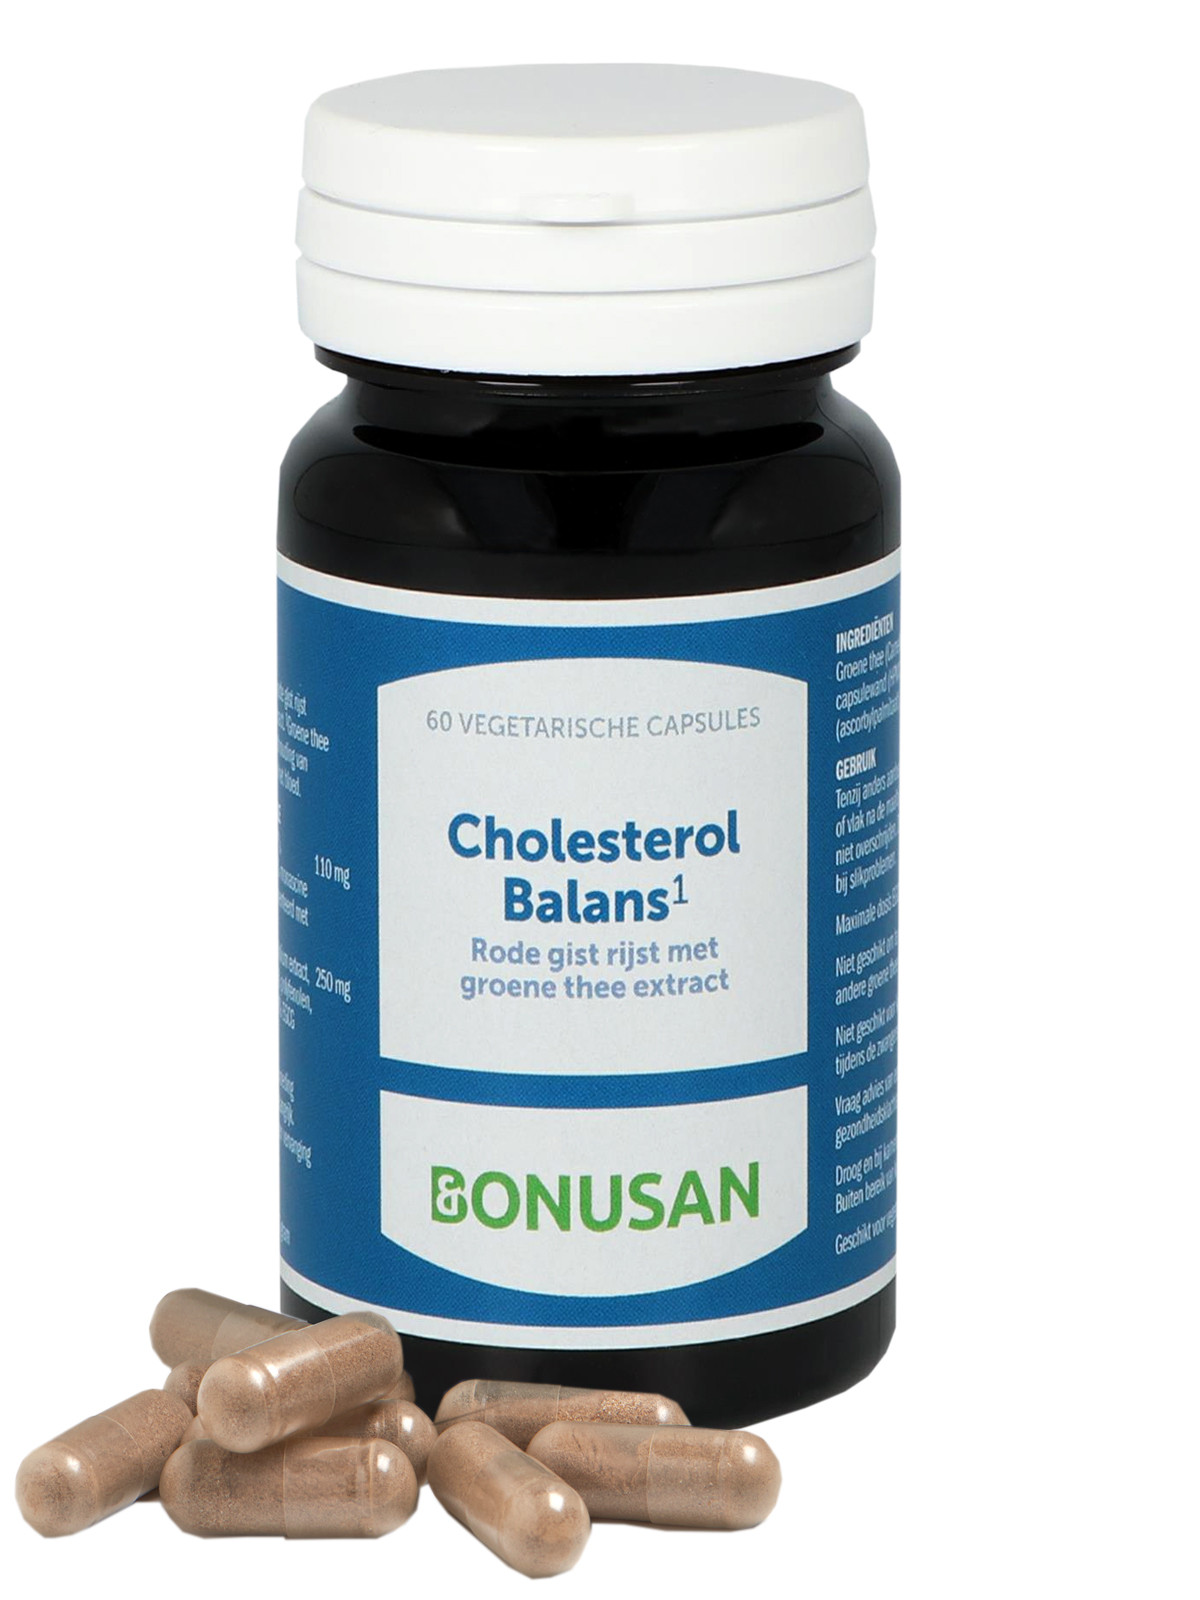 Cholesterol Balans